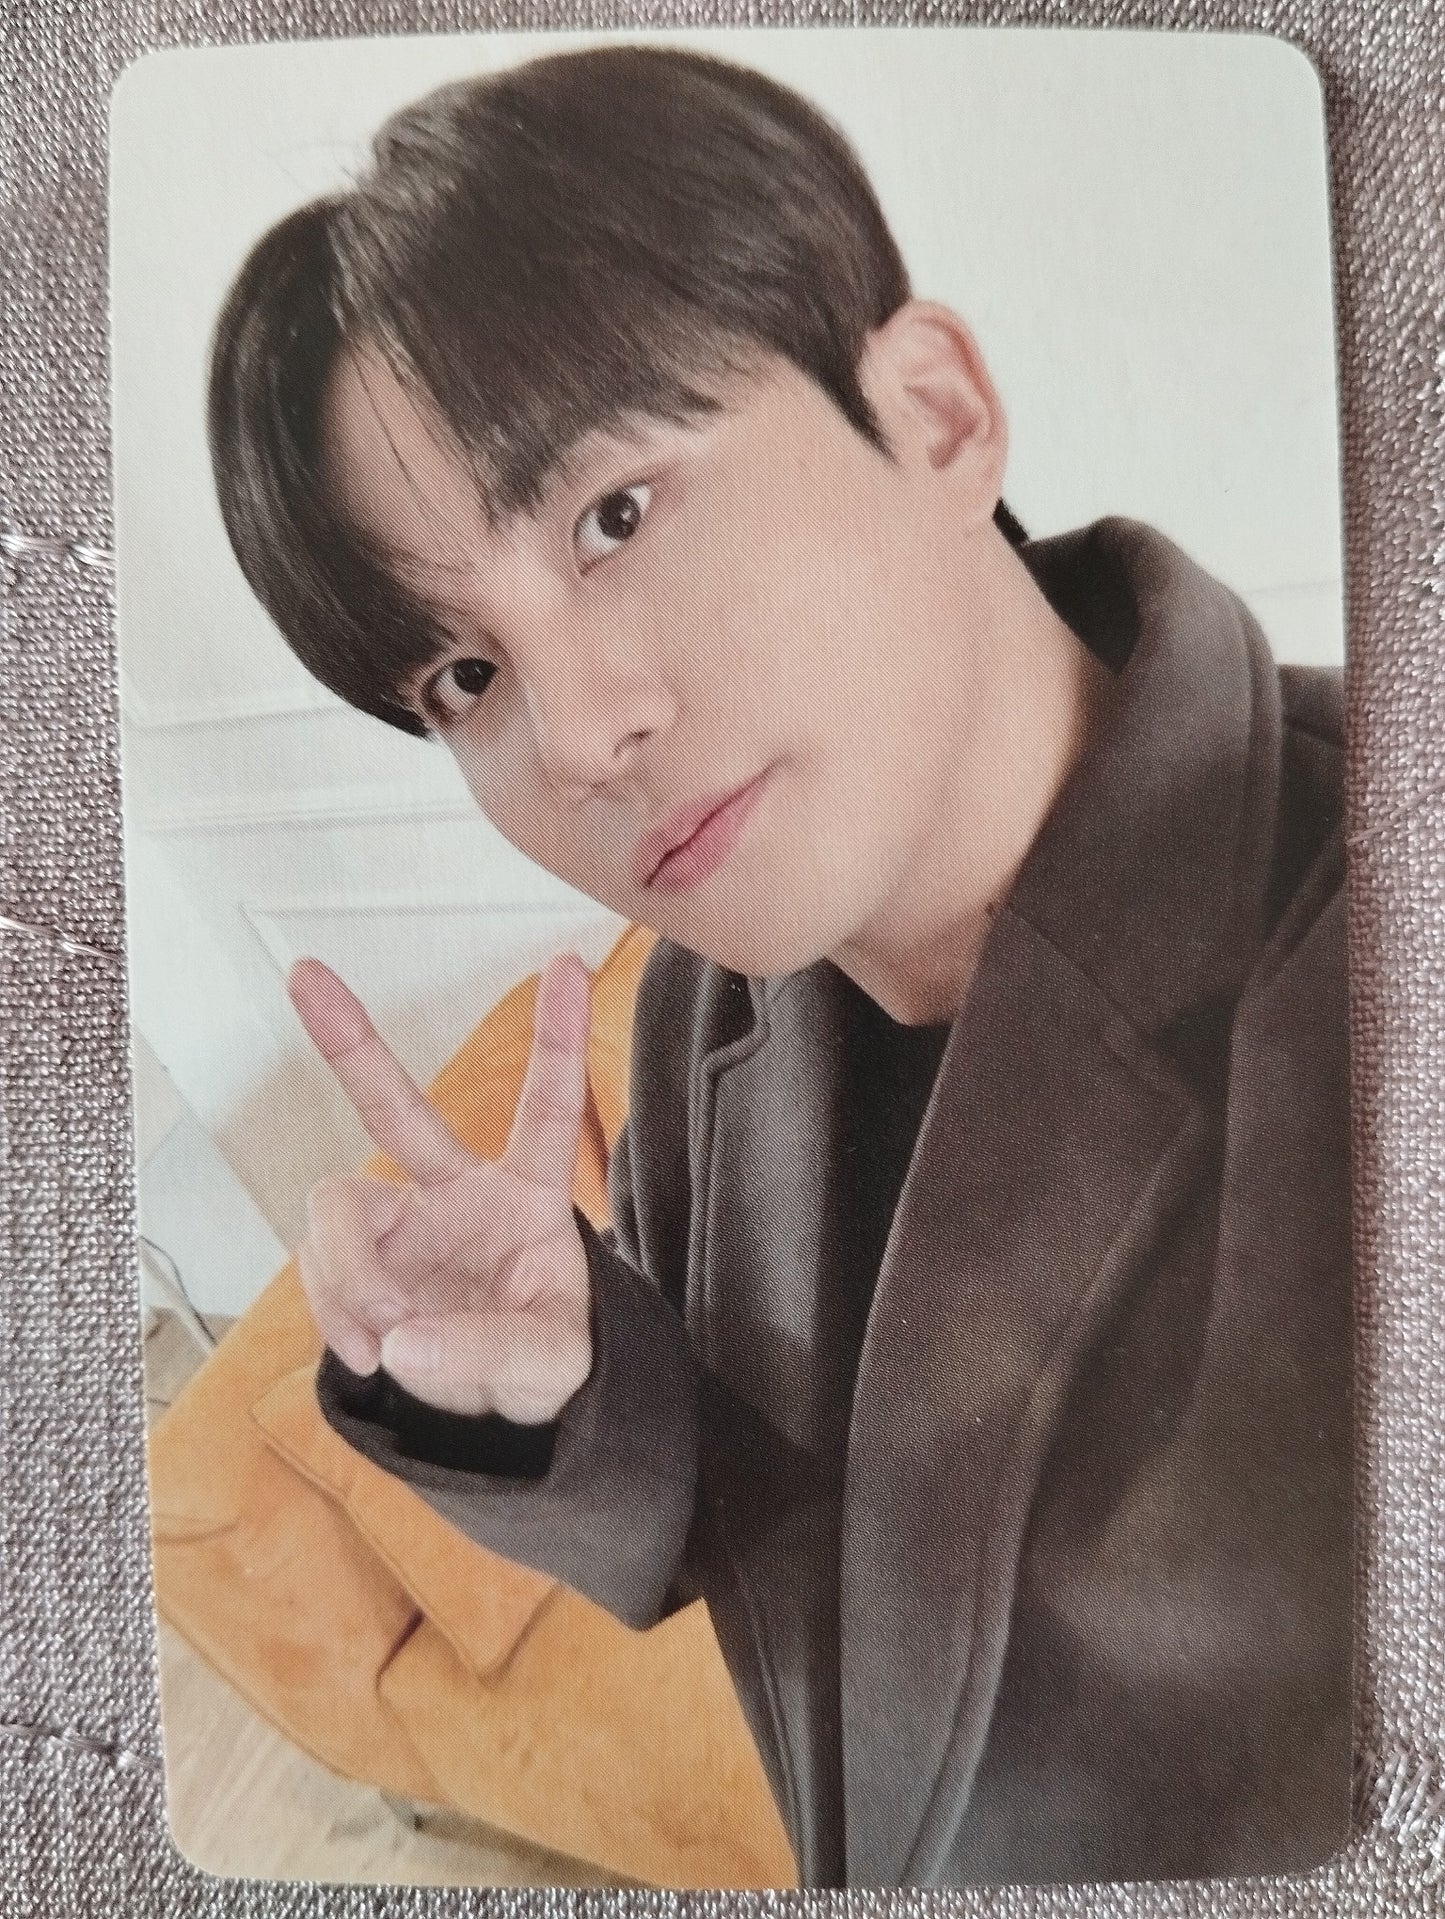 Photocard   ATEEZ  2024 Season's greetings Jongho